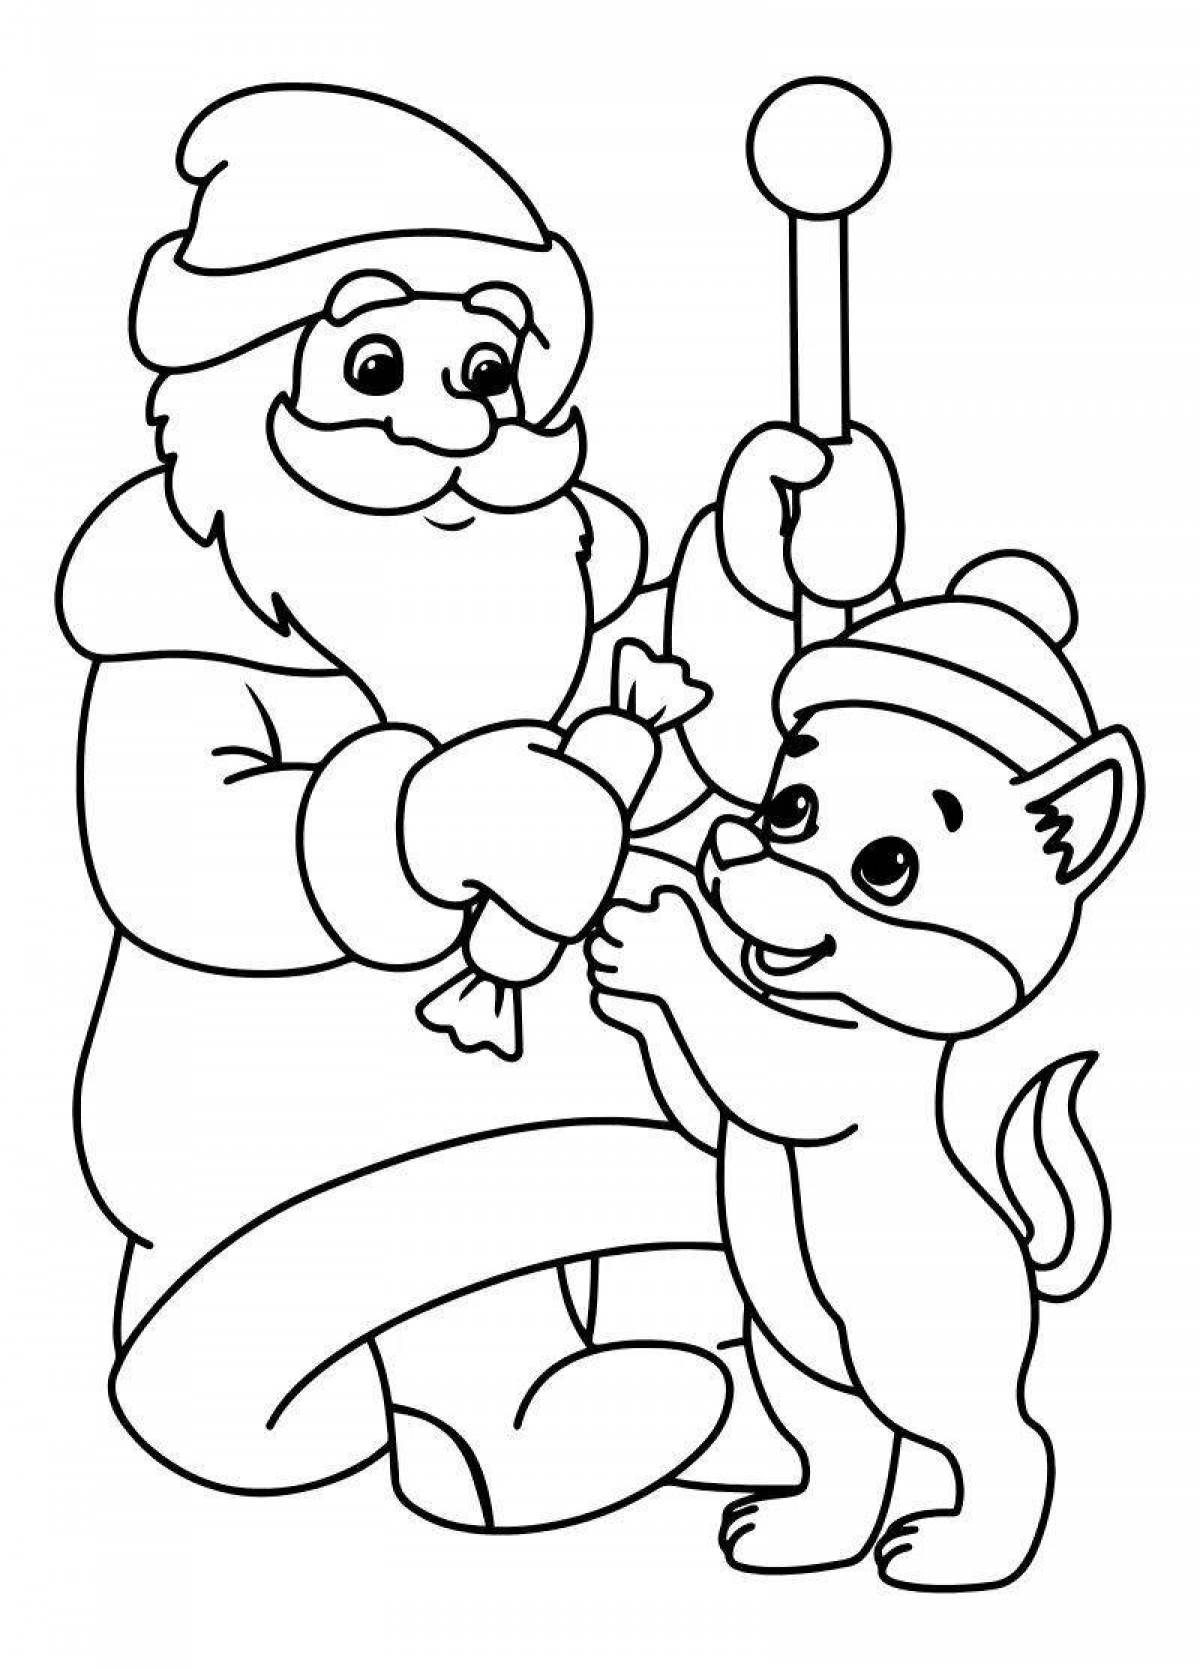 Joyful santa coloring page